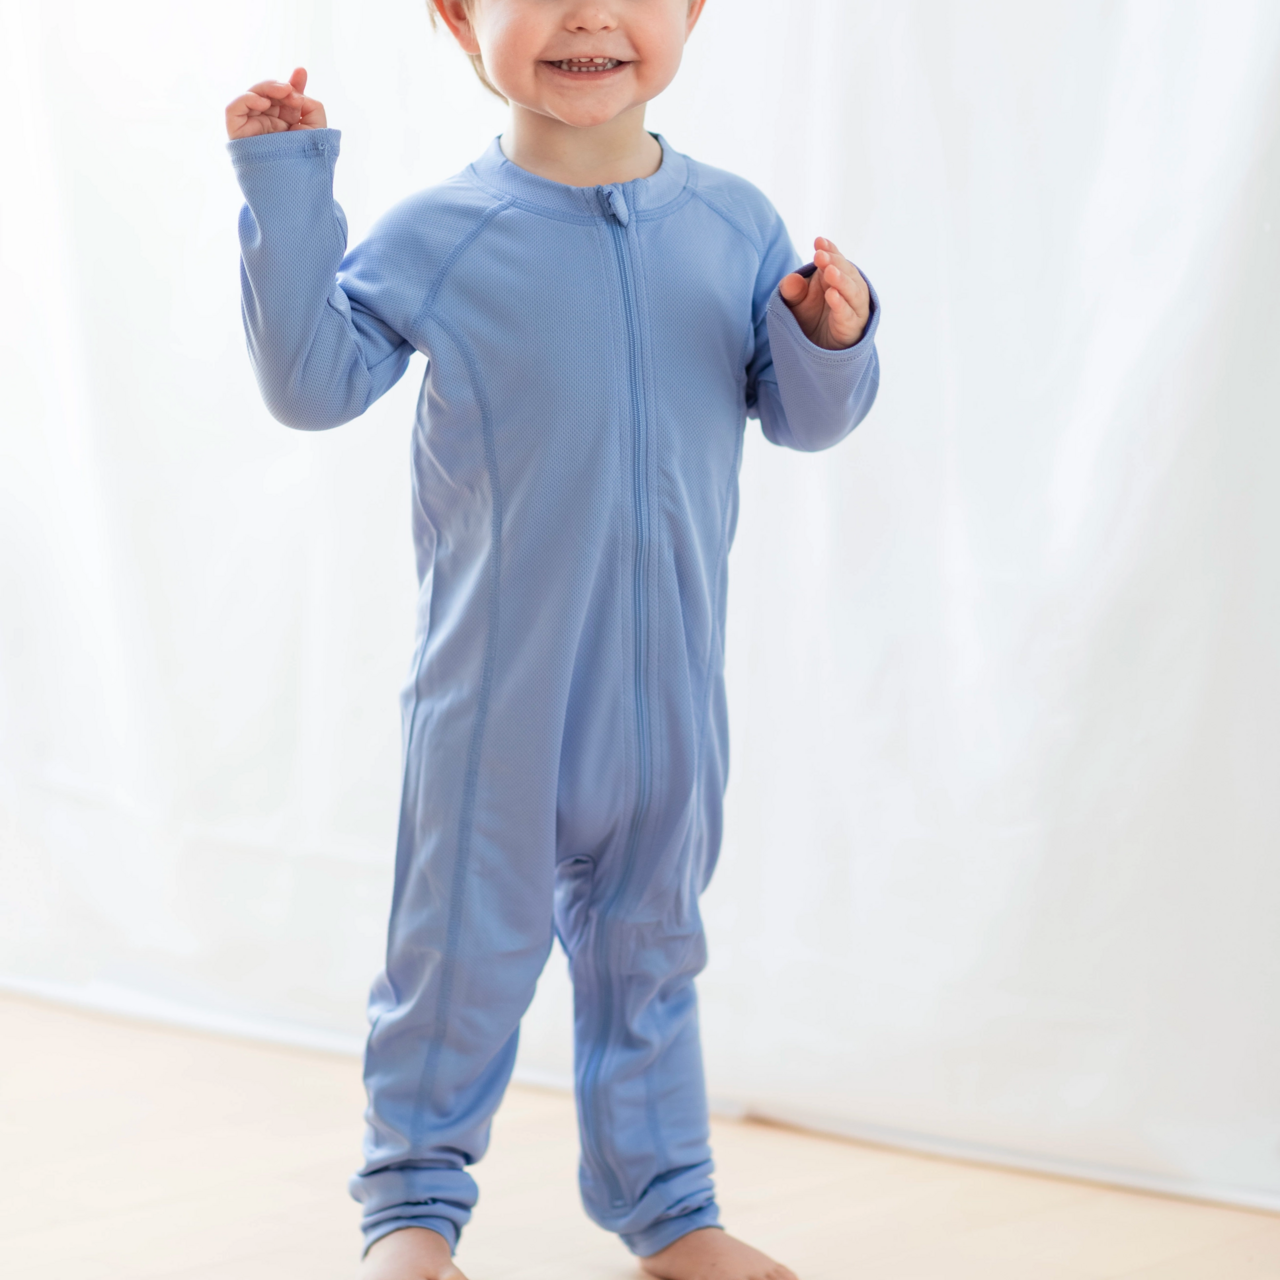 UV Baby suit Blue 50/56